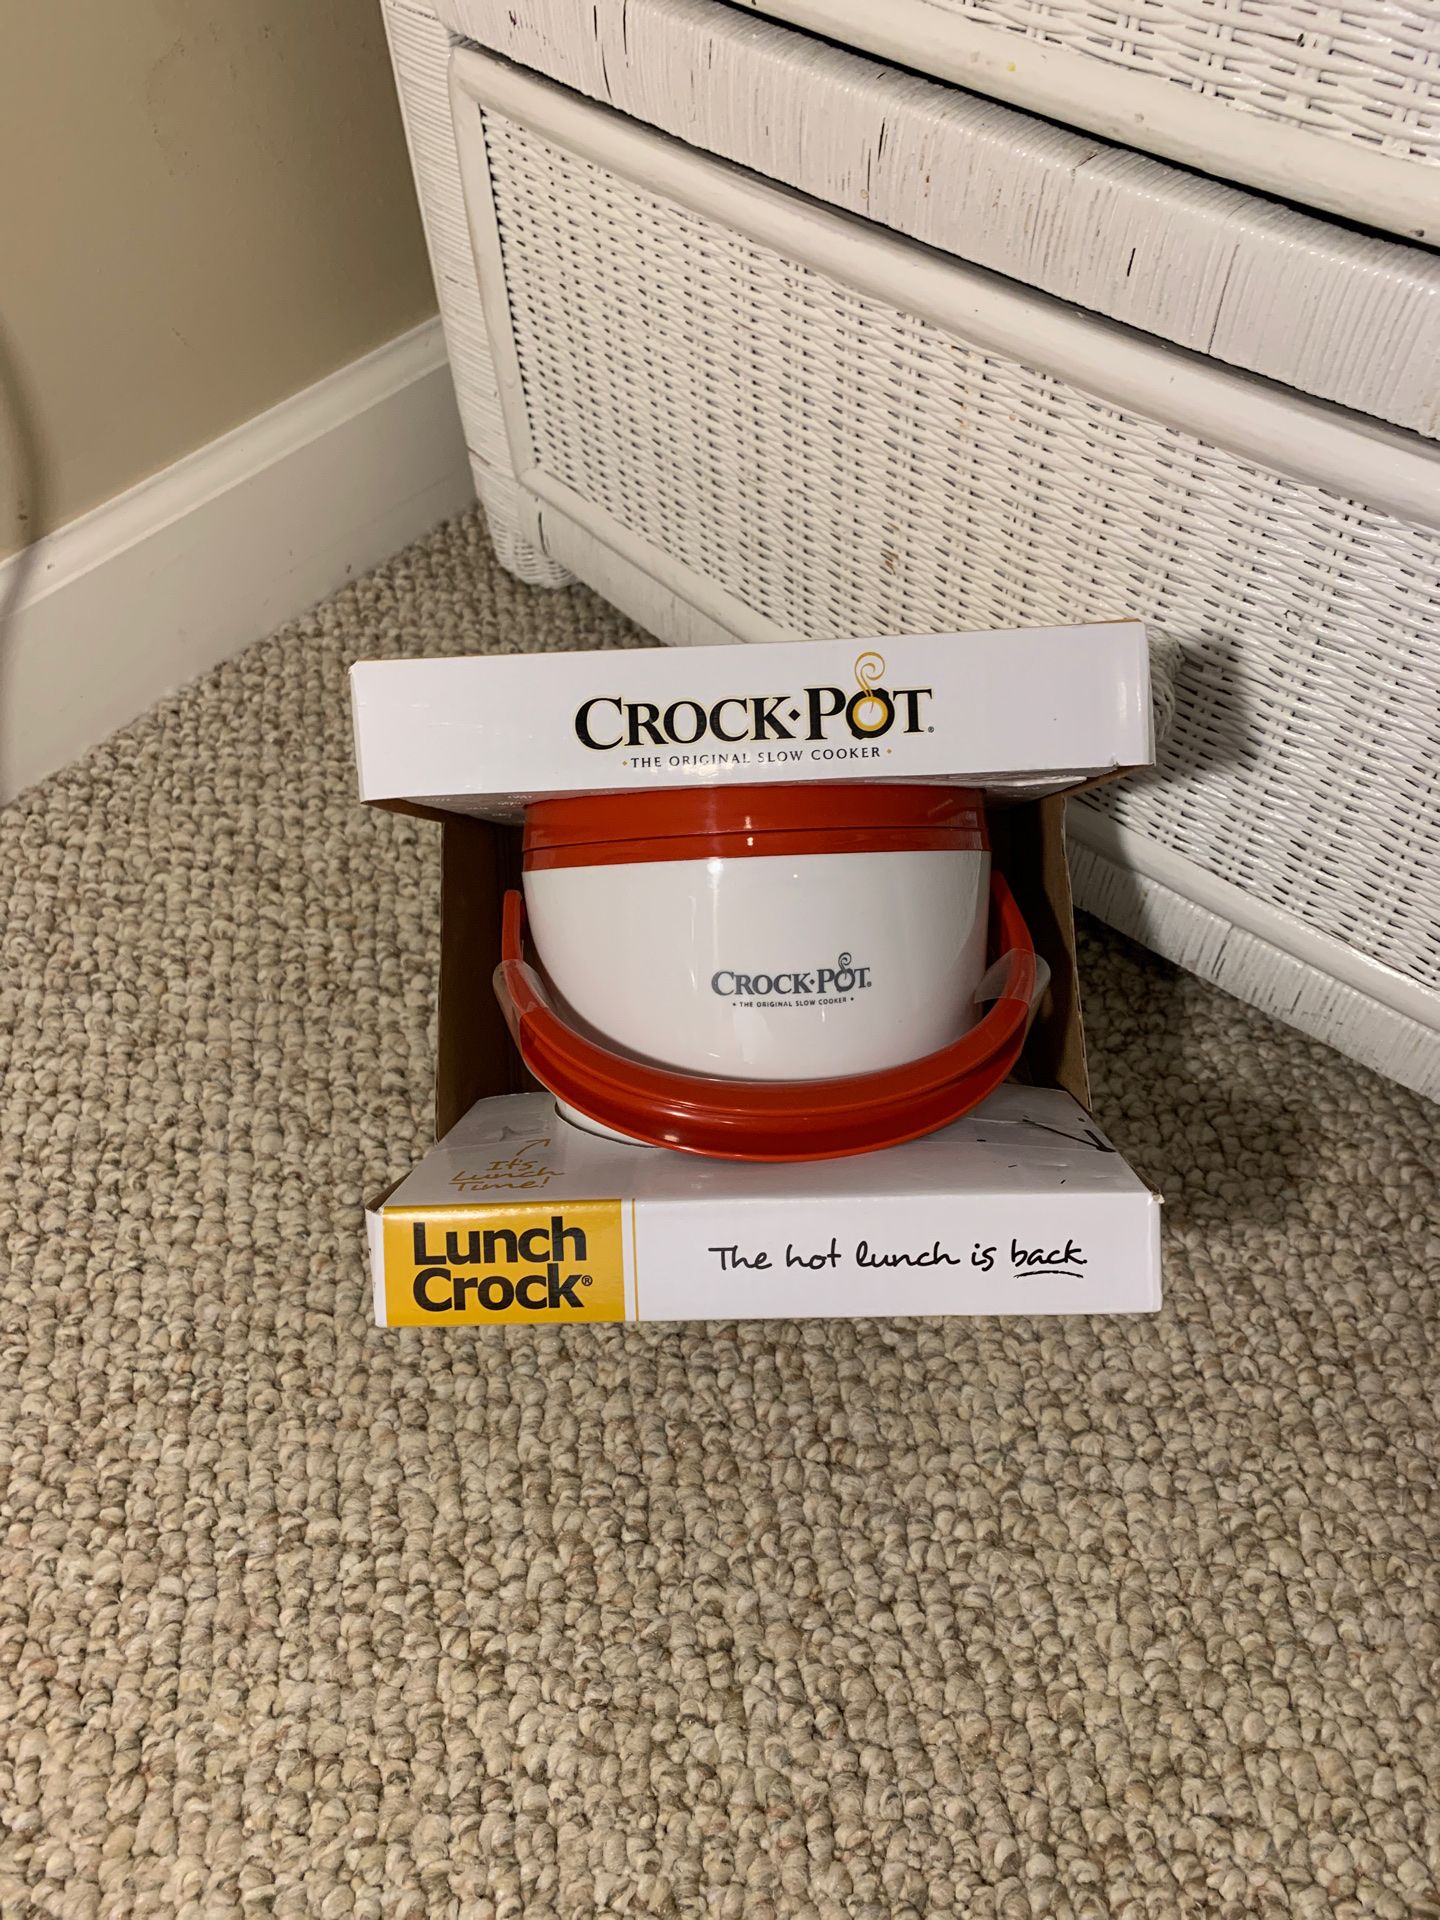 Lunch crock pot